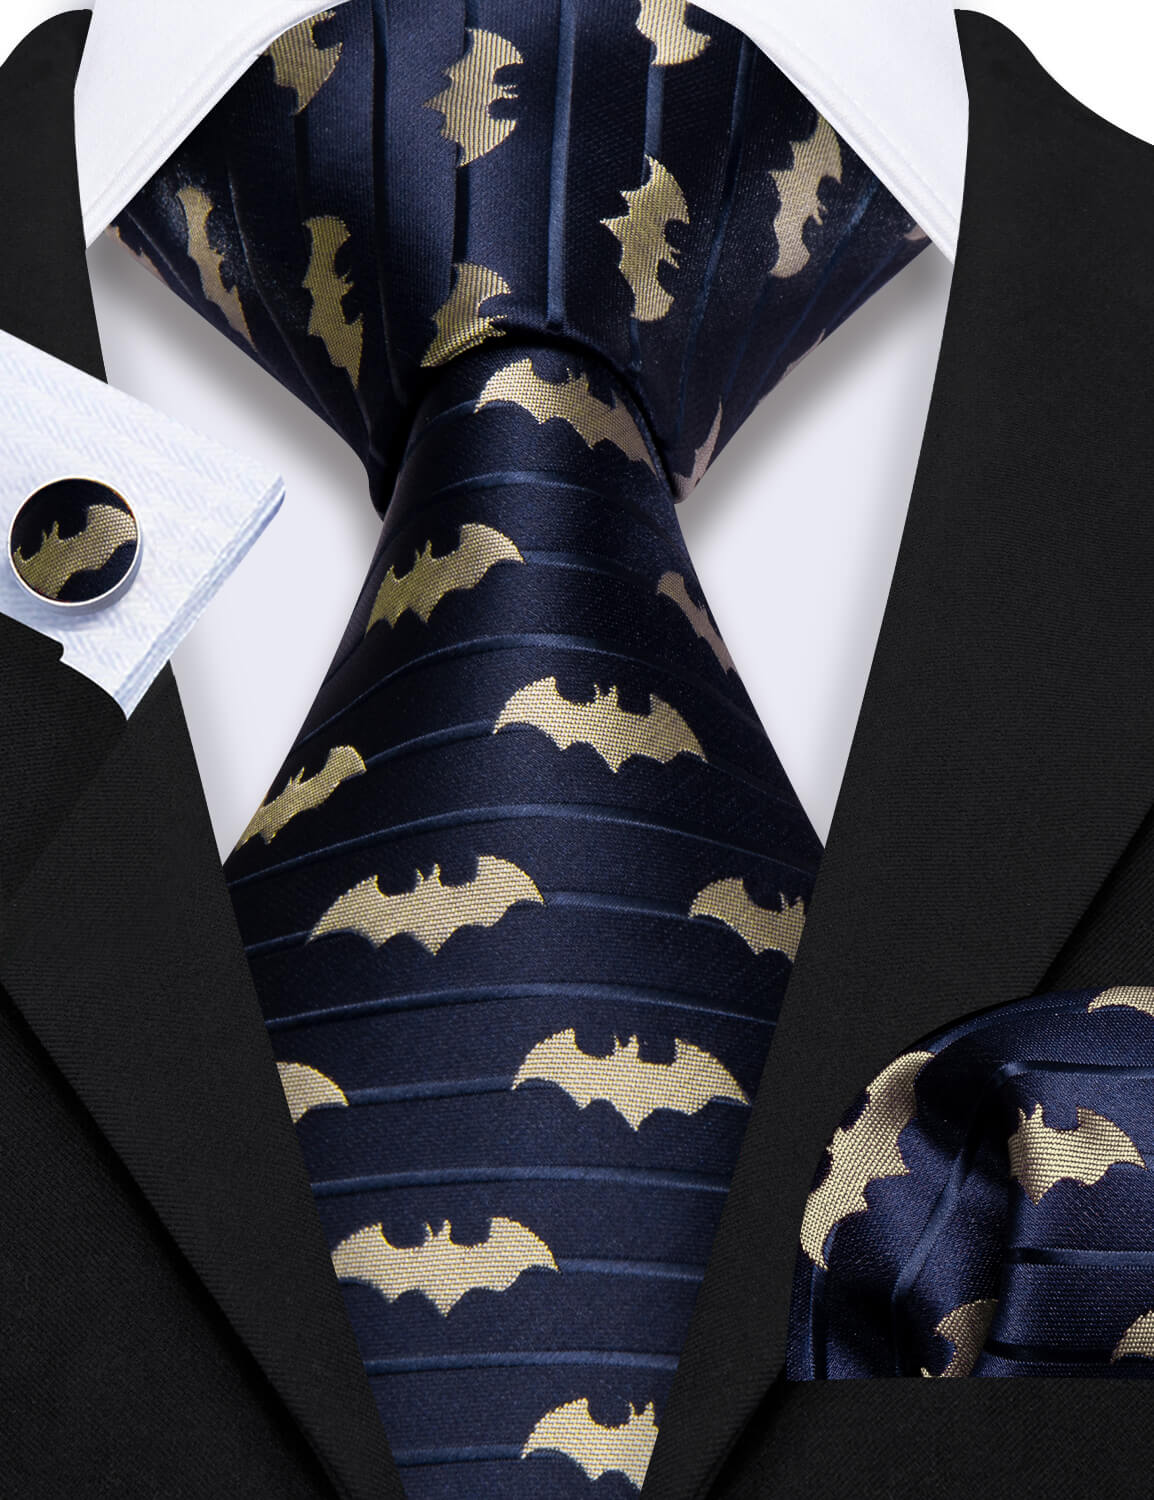 Barry.wang Blue Tie Navy Yellow Jacquard Woven Bat Men's Silk Tie Set New Hot